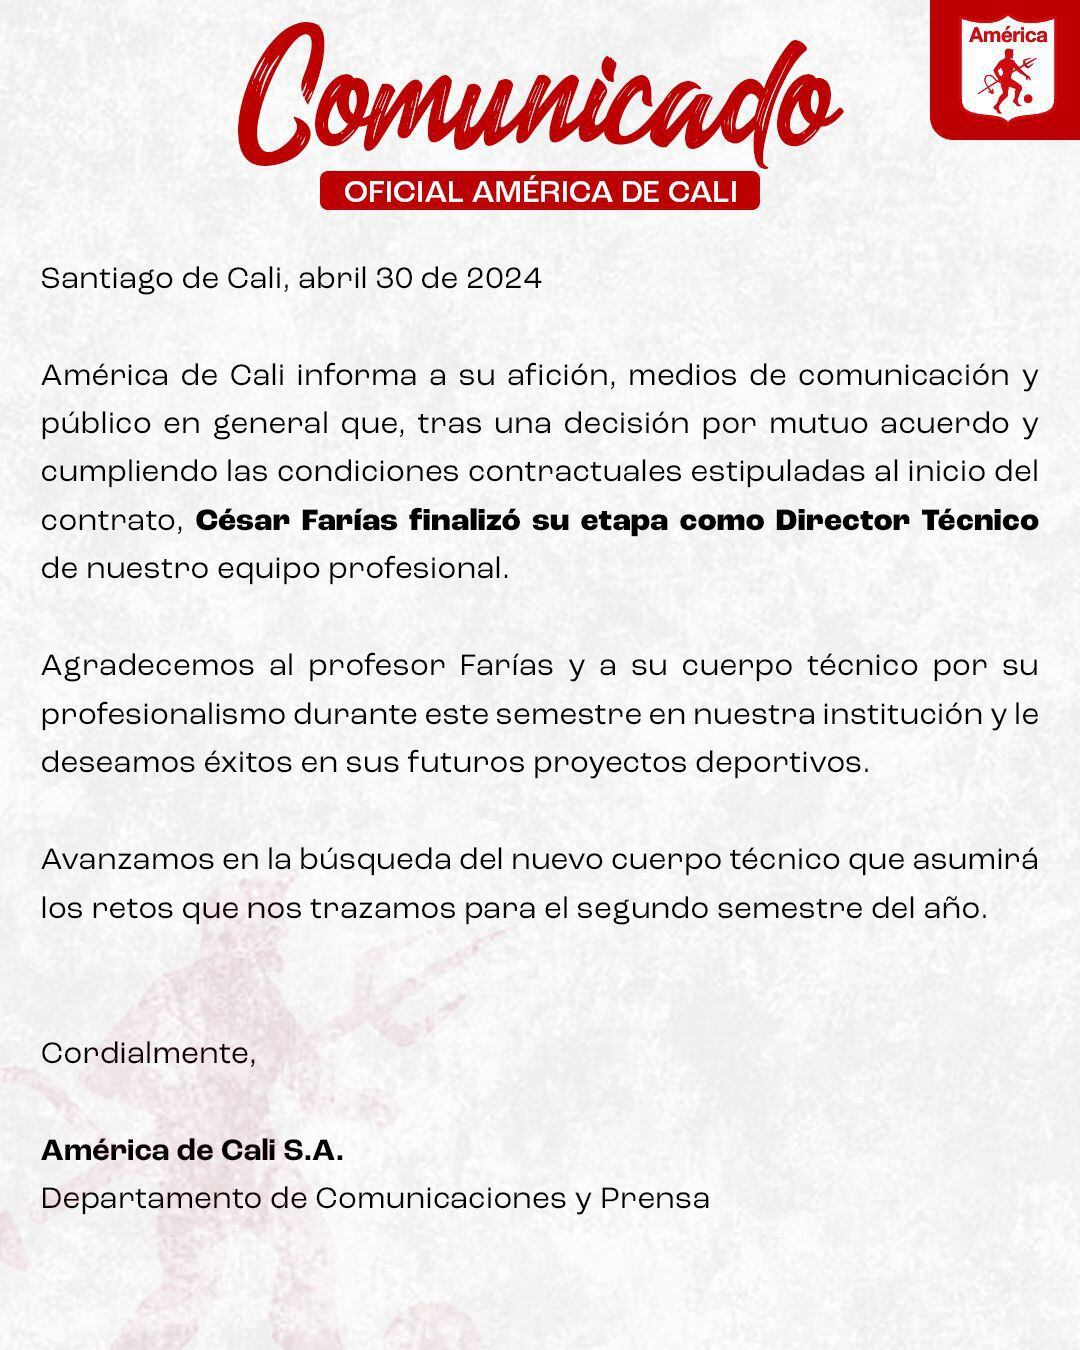 Comunicado oficial sobre la salida de César Farías del América de Cali.